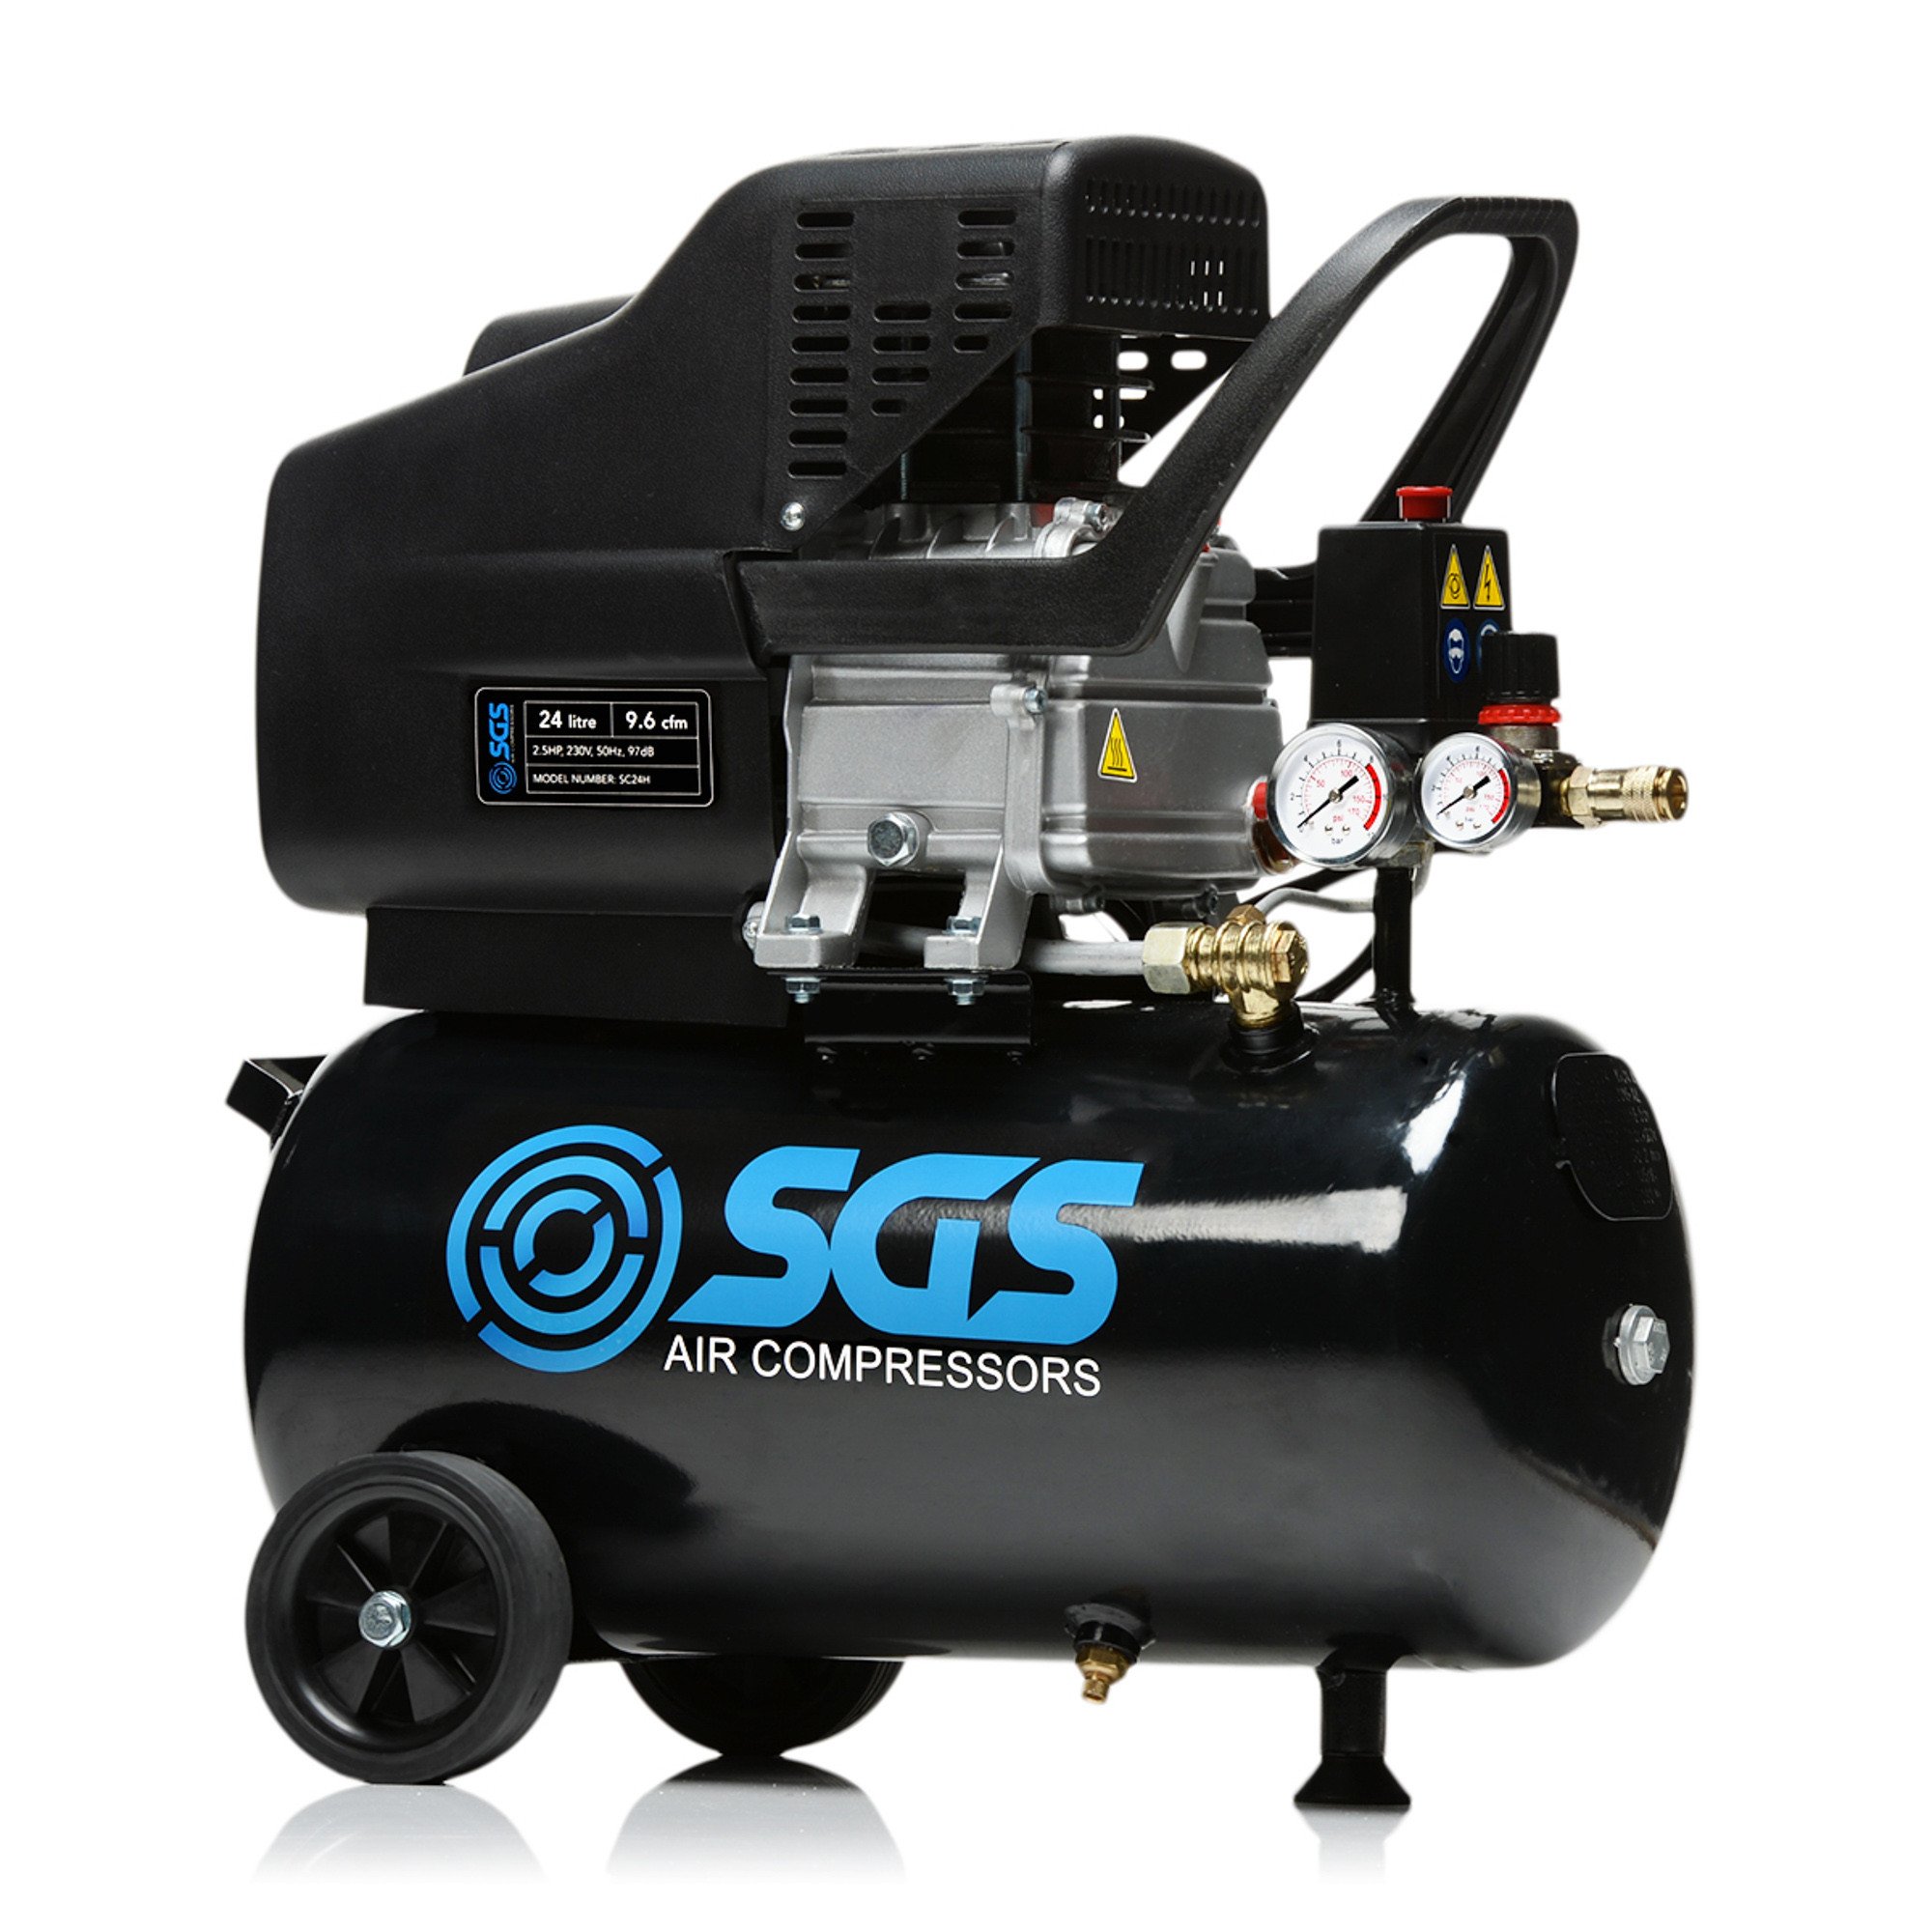 SGS 24升直接驱动空气压缩机-9.6CFM 2.5HP 24L